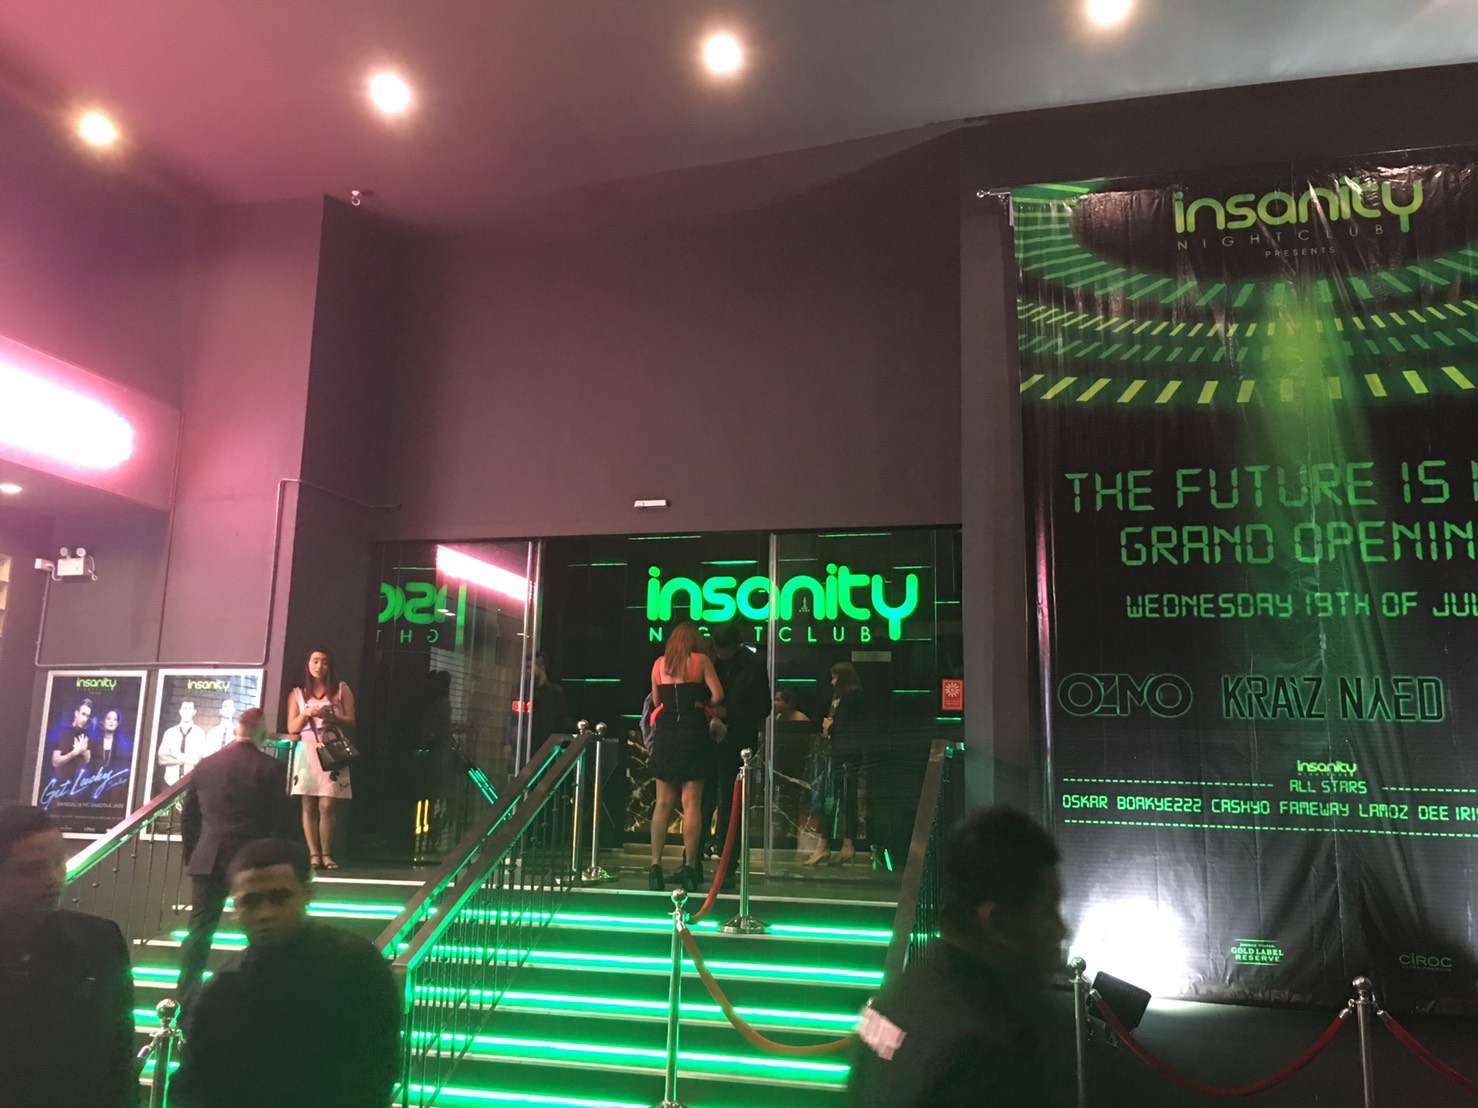 Insanity,Insanity Nightclub,インサニティ,移転,2017年,住所,場所,行き方,クラブ,ディスコ,バンコク,タイ